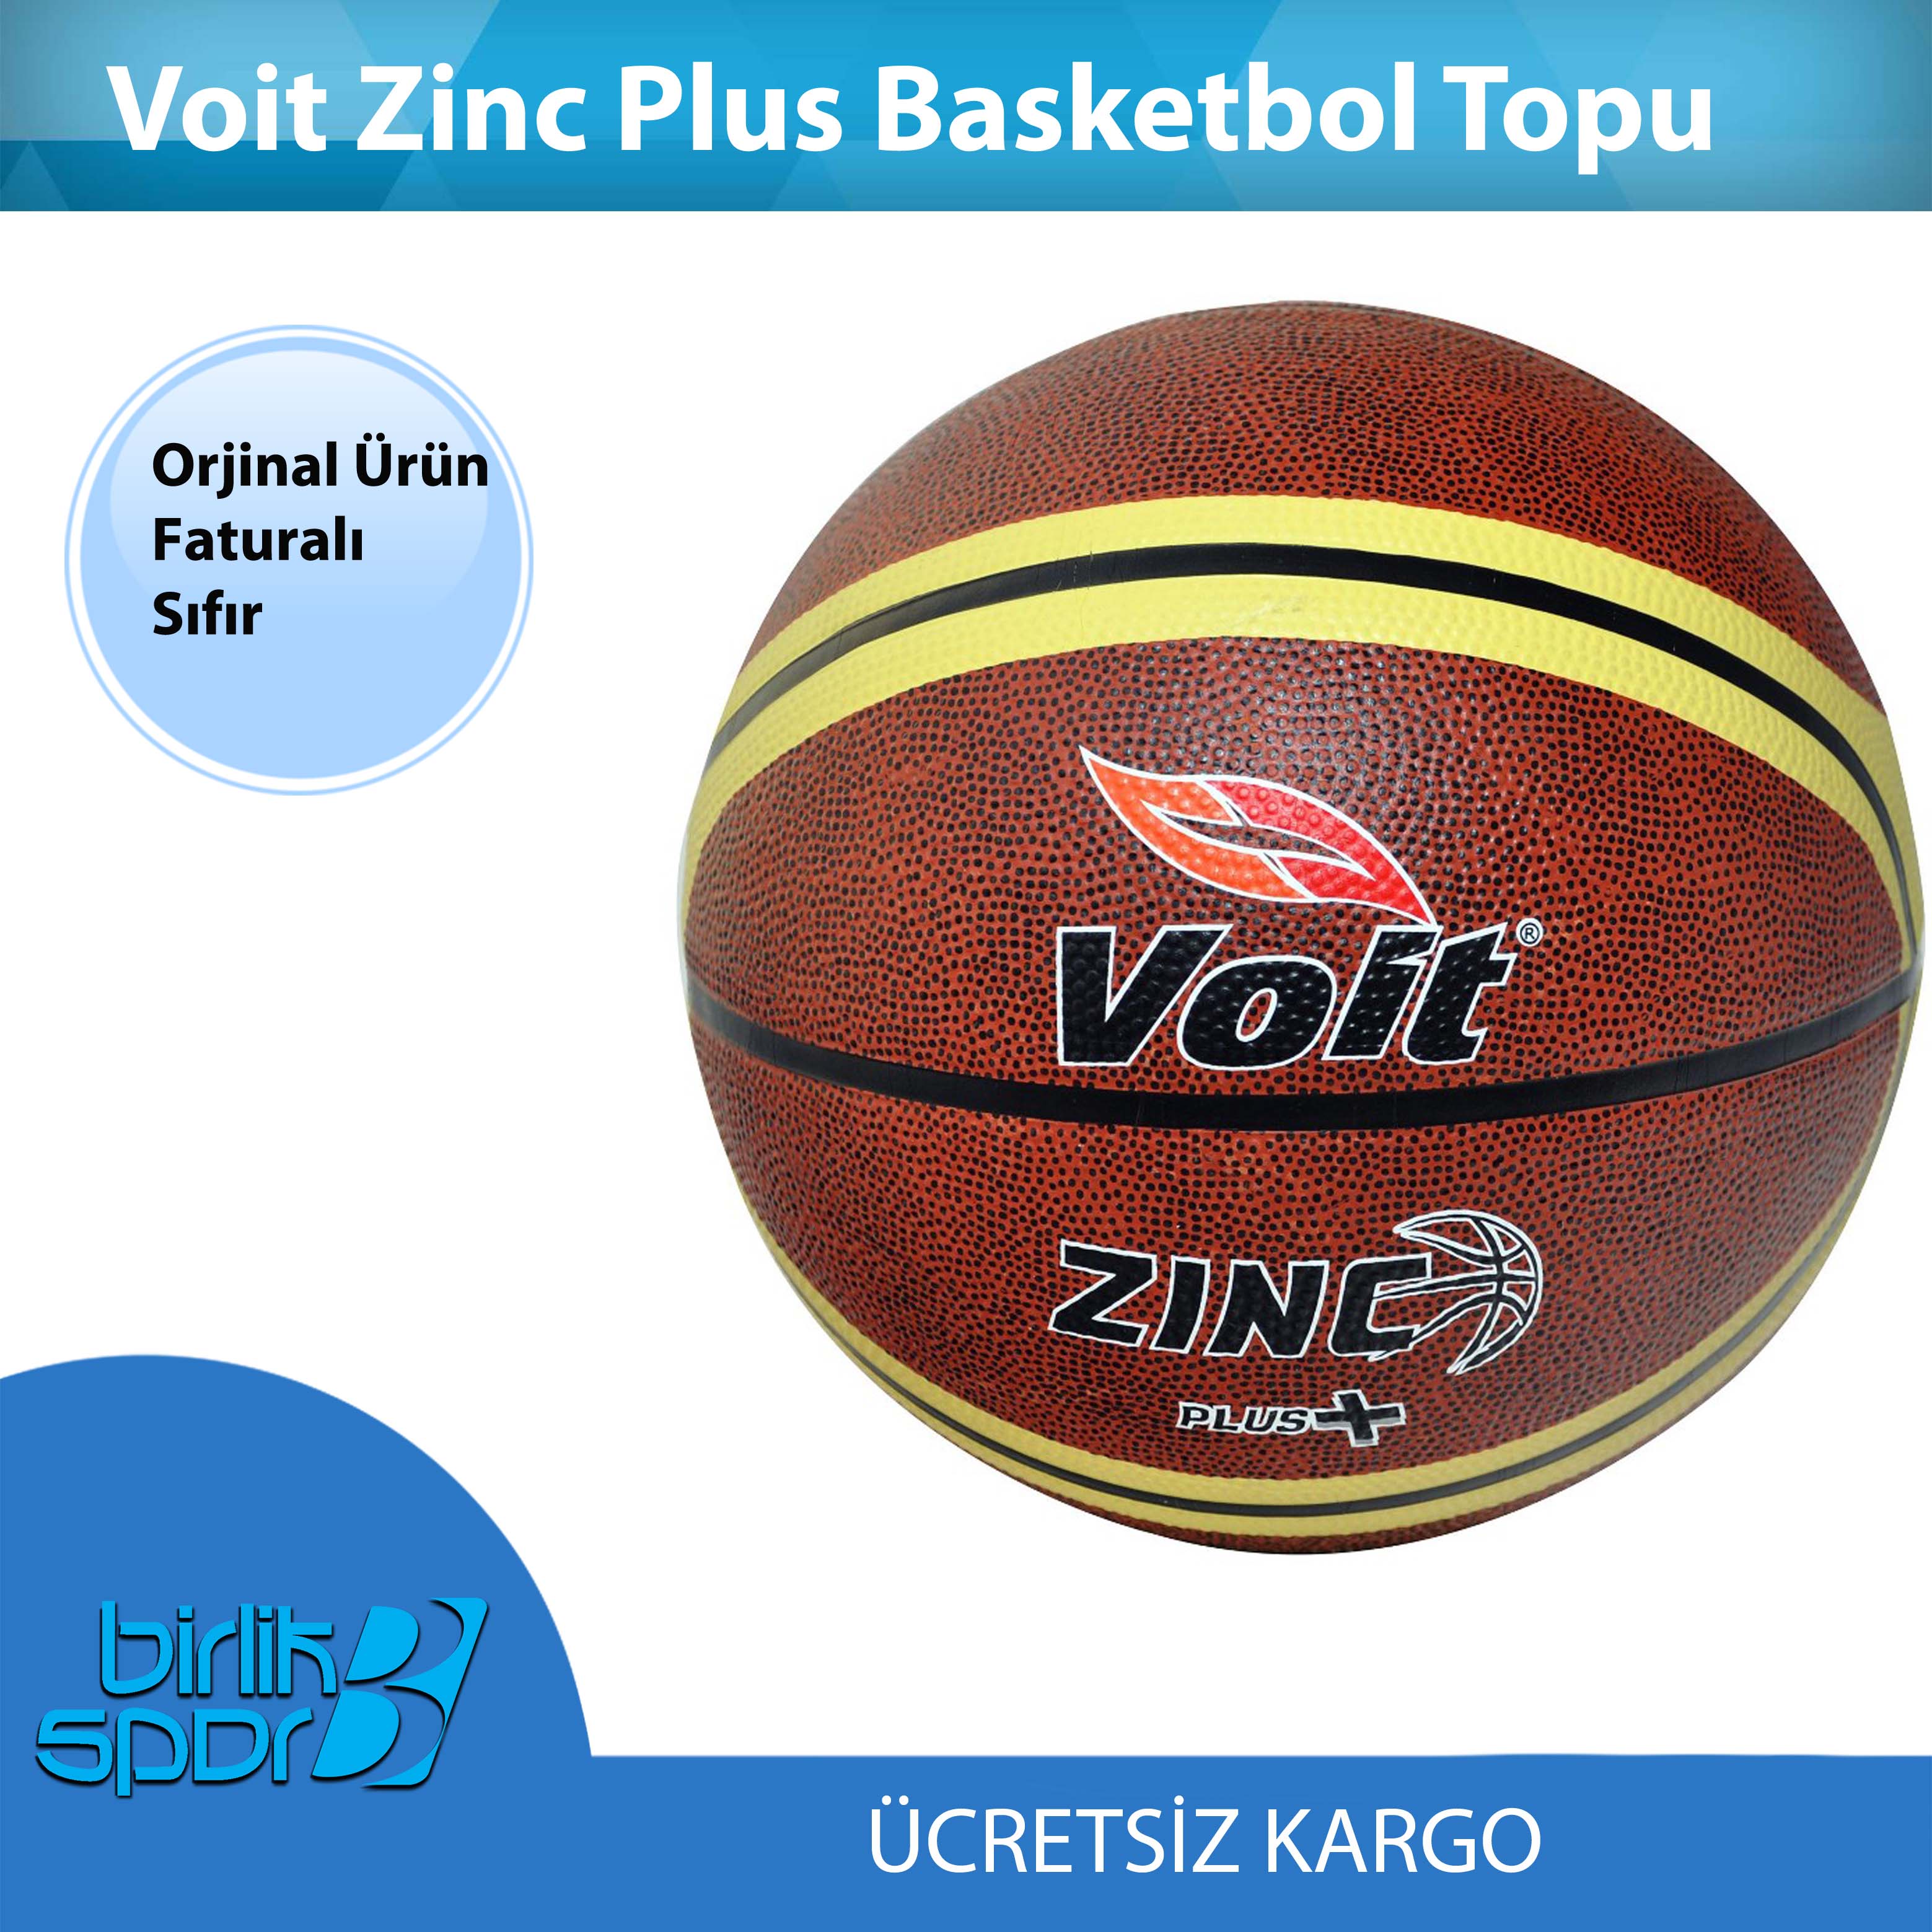 Voit Zinc Plus Basketbol Topu - Ücretsiz Kargo